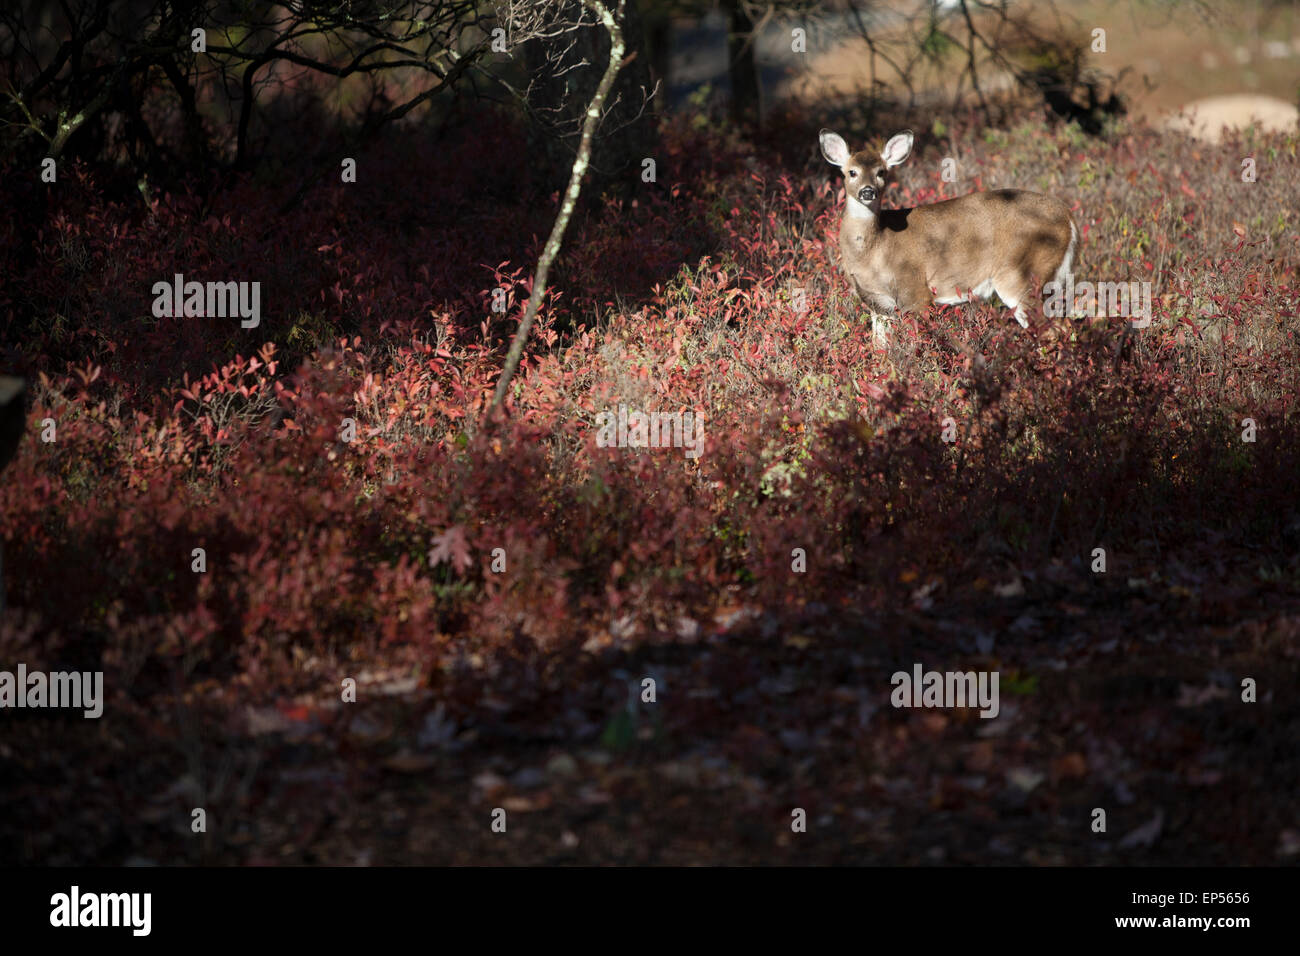 Deer in fall setting, Pennsylvania,USA Stock Photo